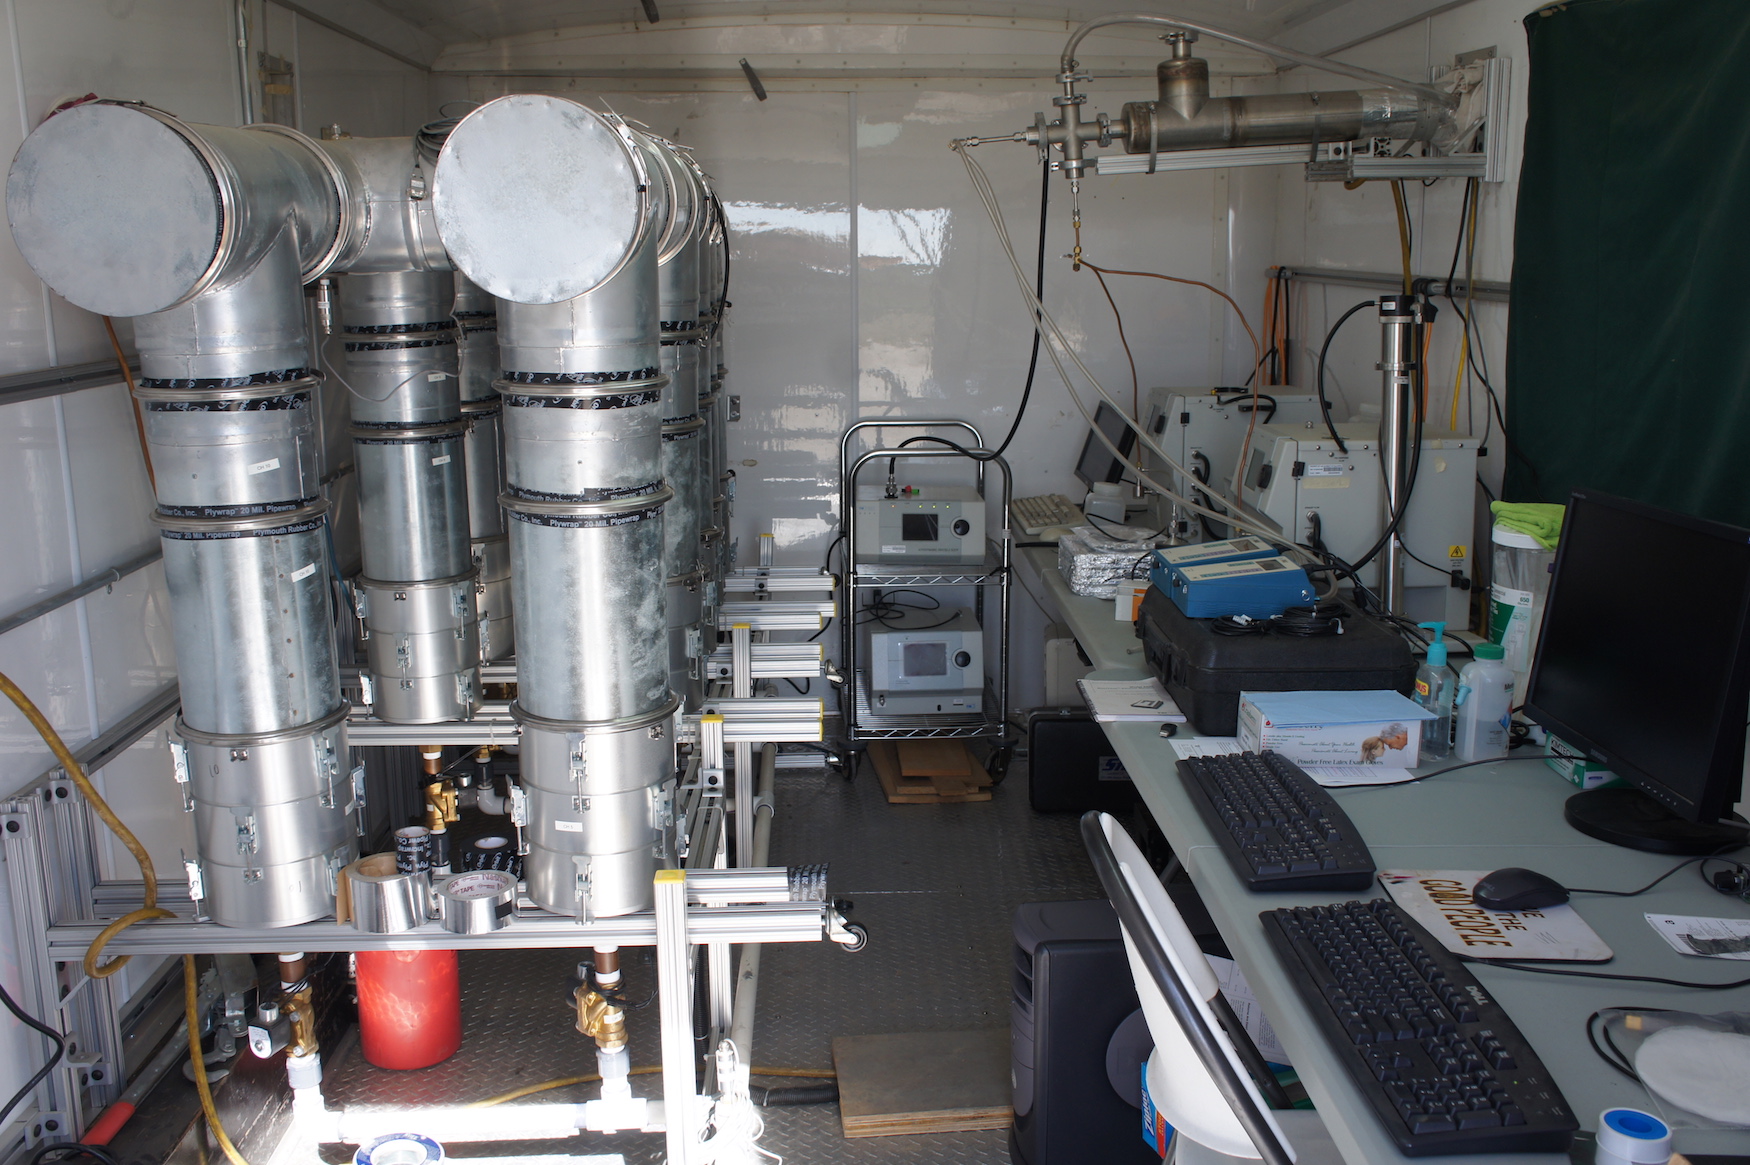 Air samplers inside mobile research trailer